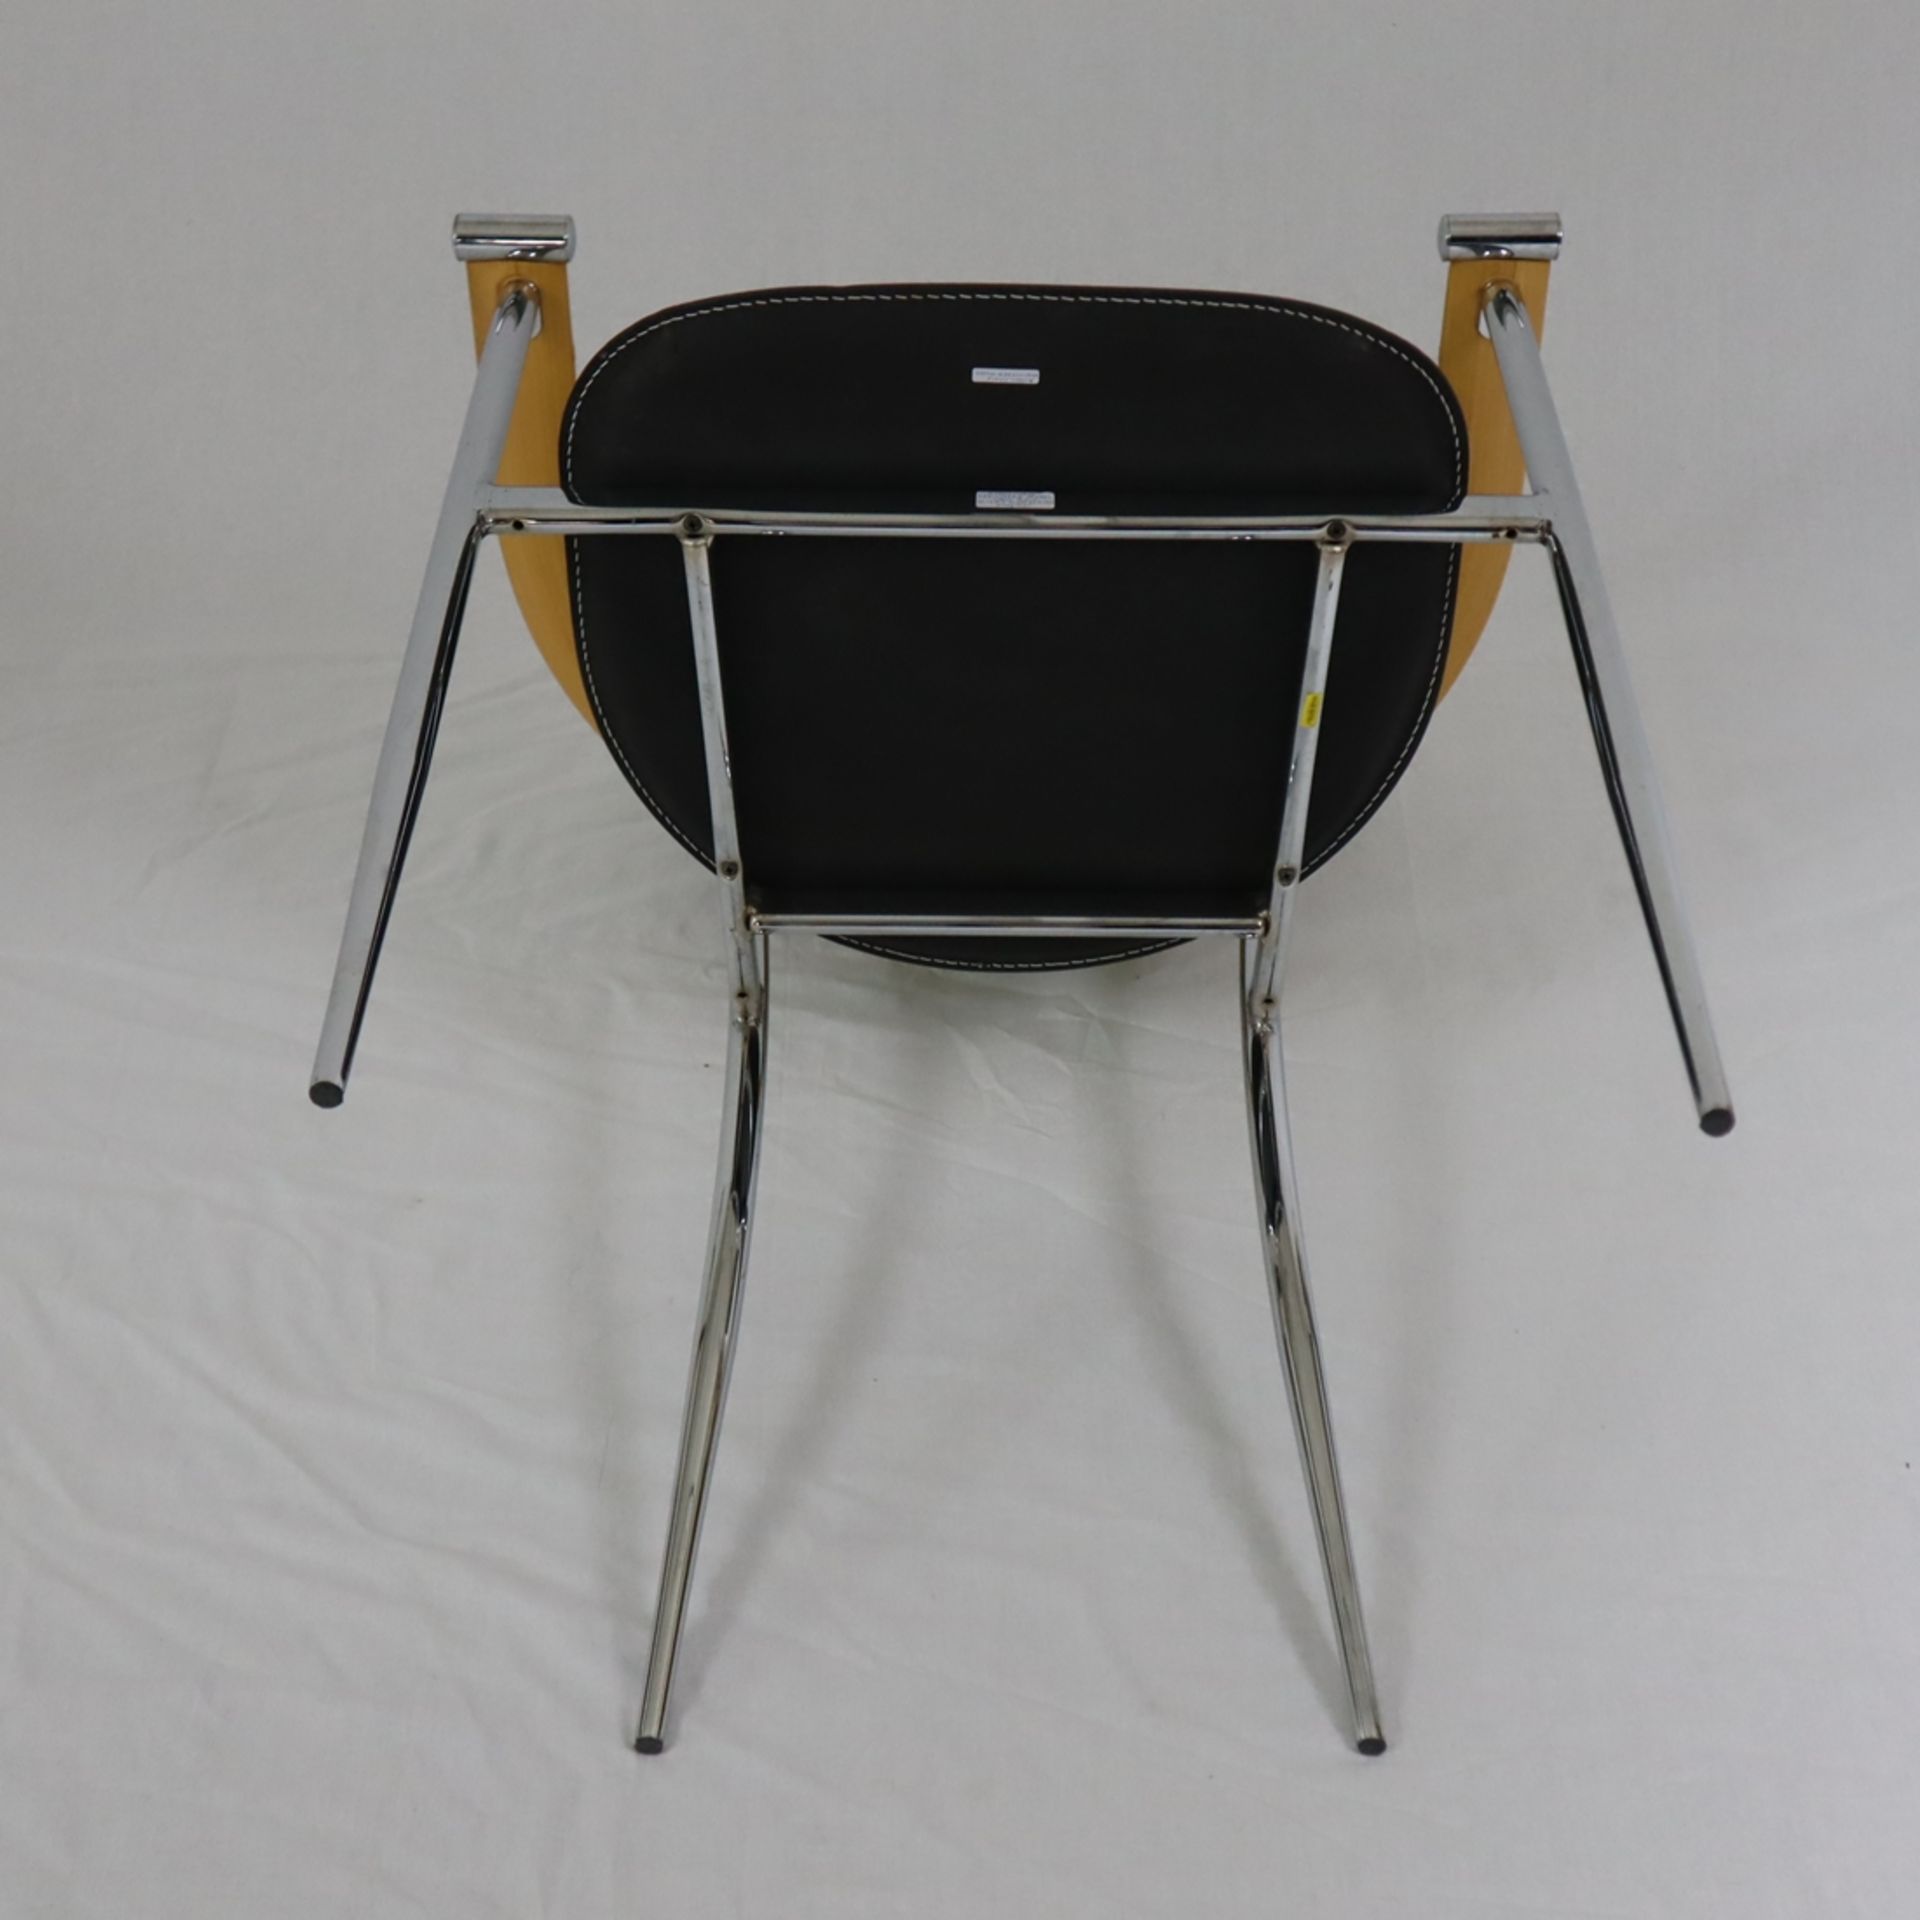 Design-Stuhl - Marylin Stiletto, Arrben/Italien, 1980er Jahre, Stahlrohr, seladonfarbene Ledersitz  - Bild 7 aus 8